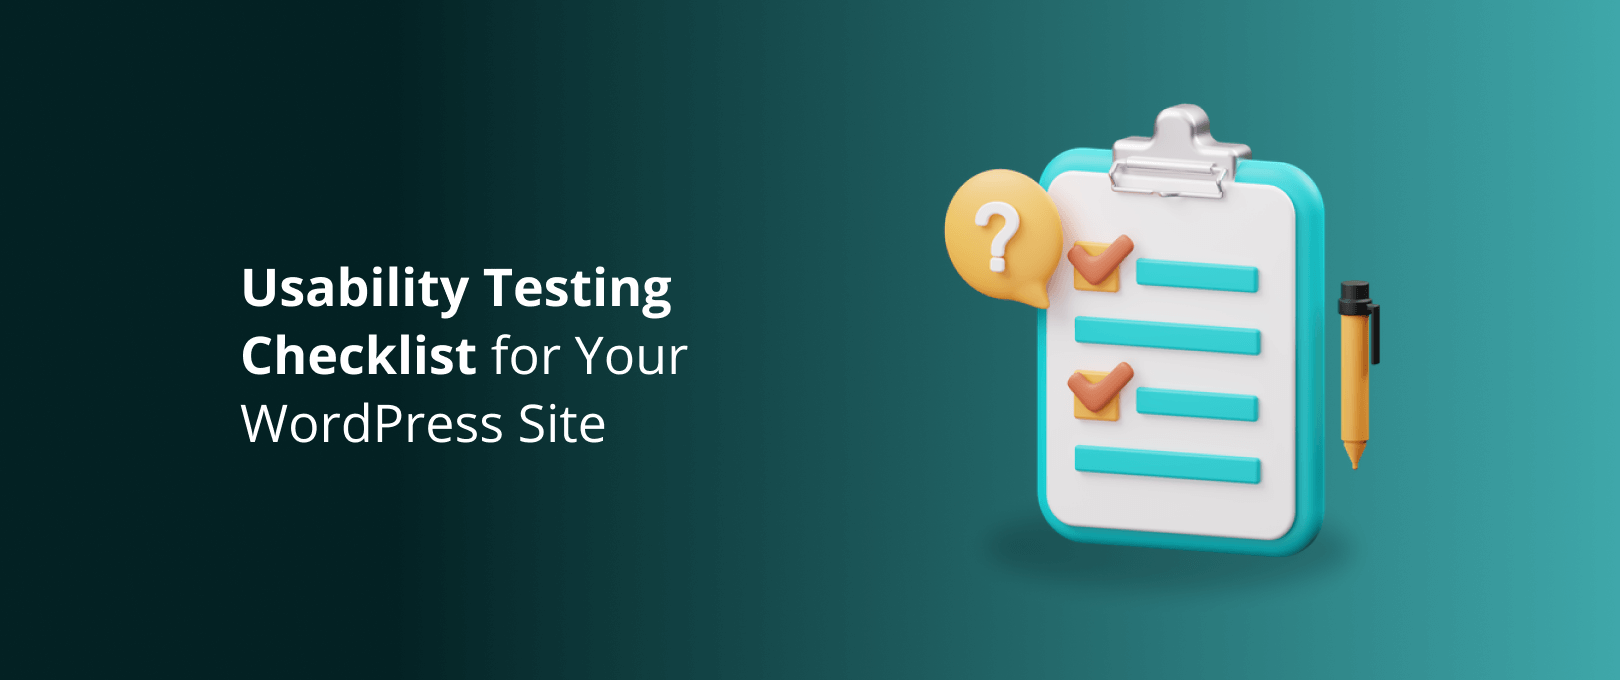 Usability Testing Checklist for Your WordPress Site - DevriX